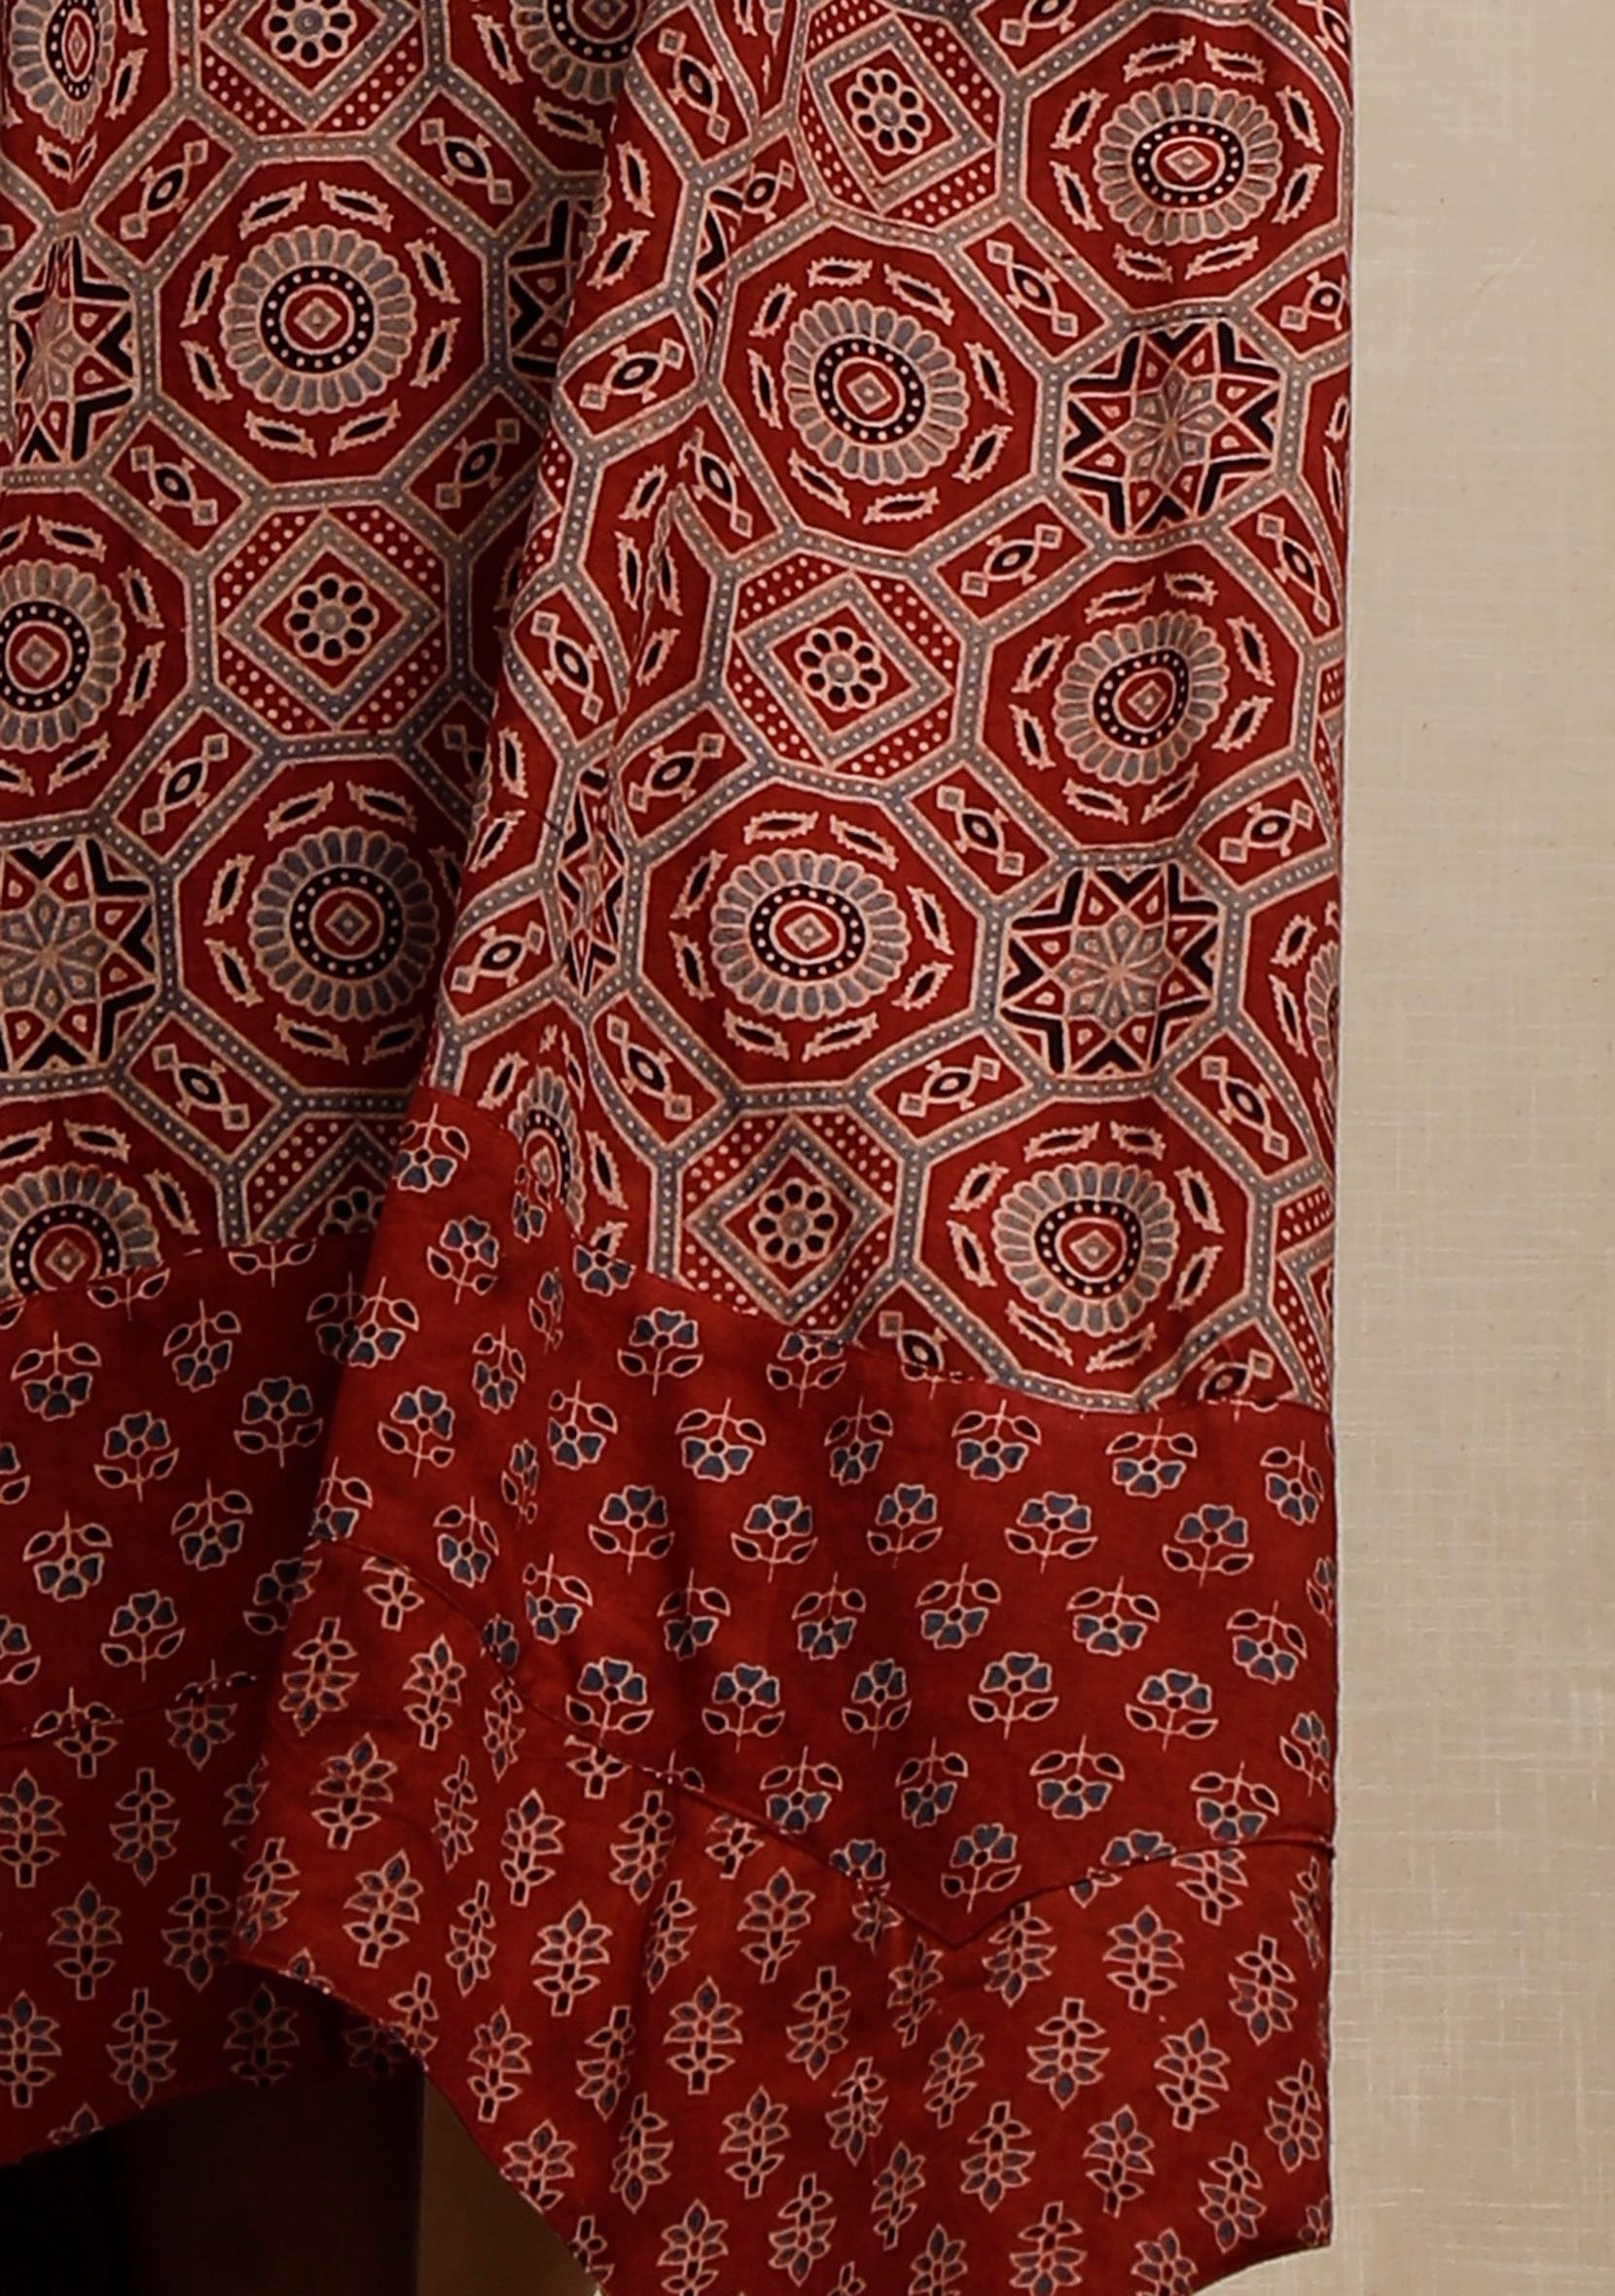 Red Ajrakh Print Sleeveless Asymmetrical Dress